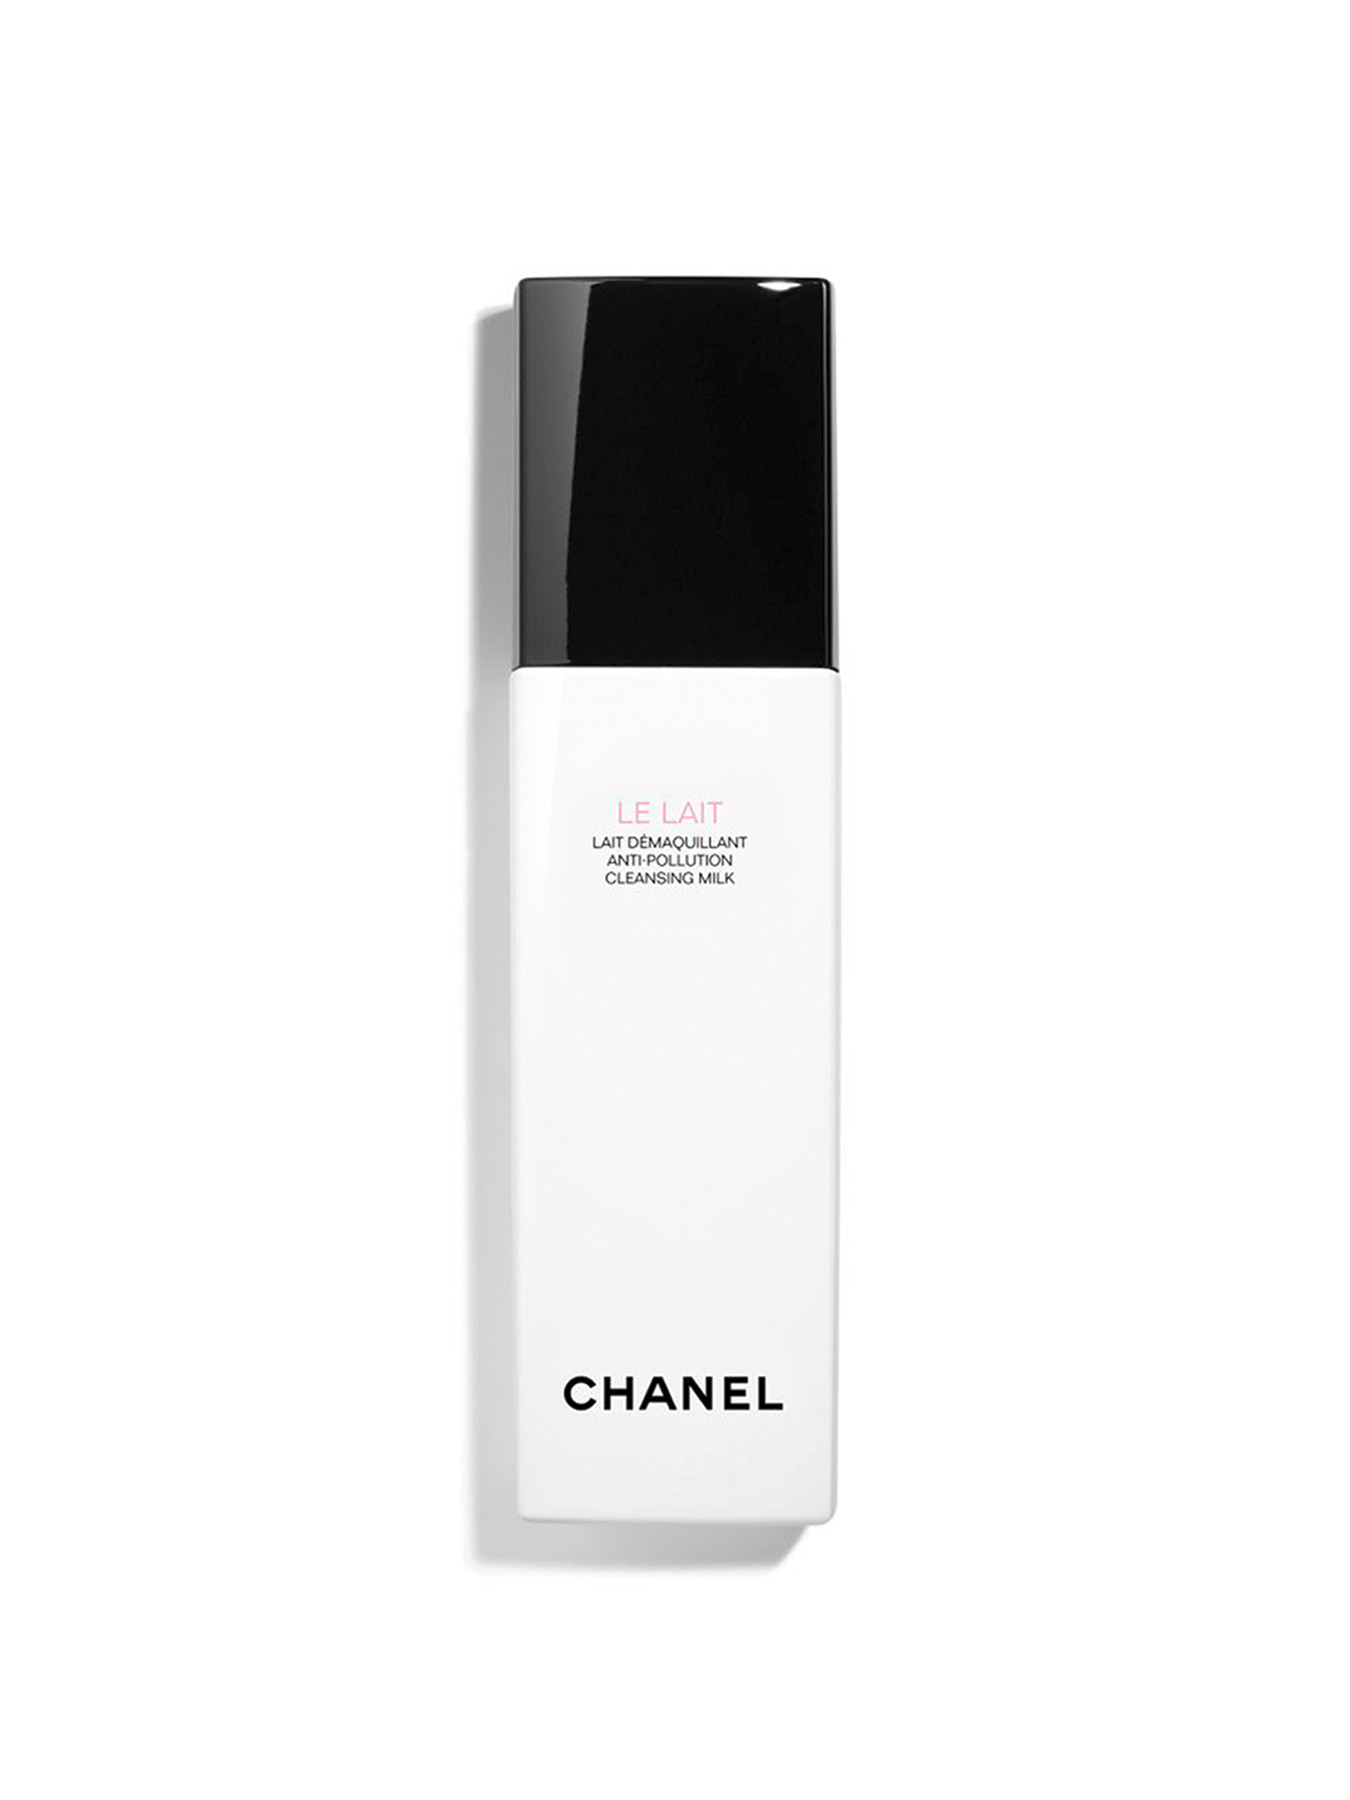 Chanel Le Lait Anti-pollution Cleansing Milk